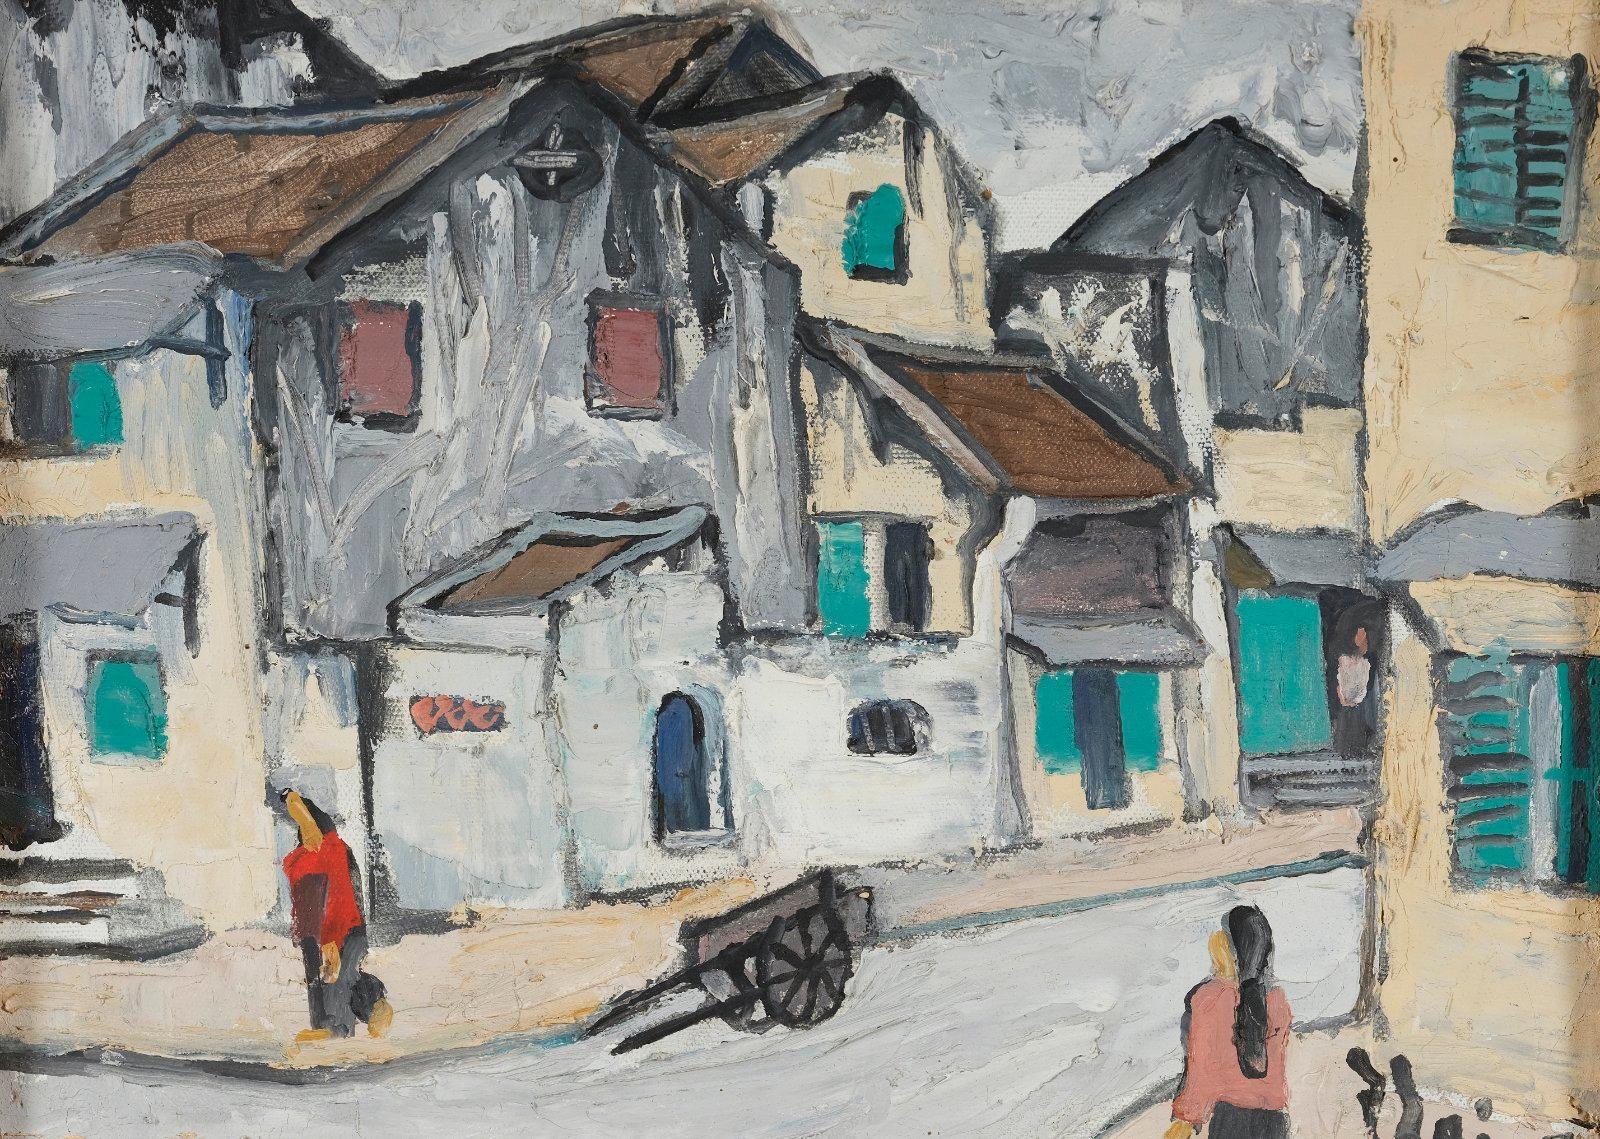 Hanoi Street. by Bui Xuan Phai, 1984